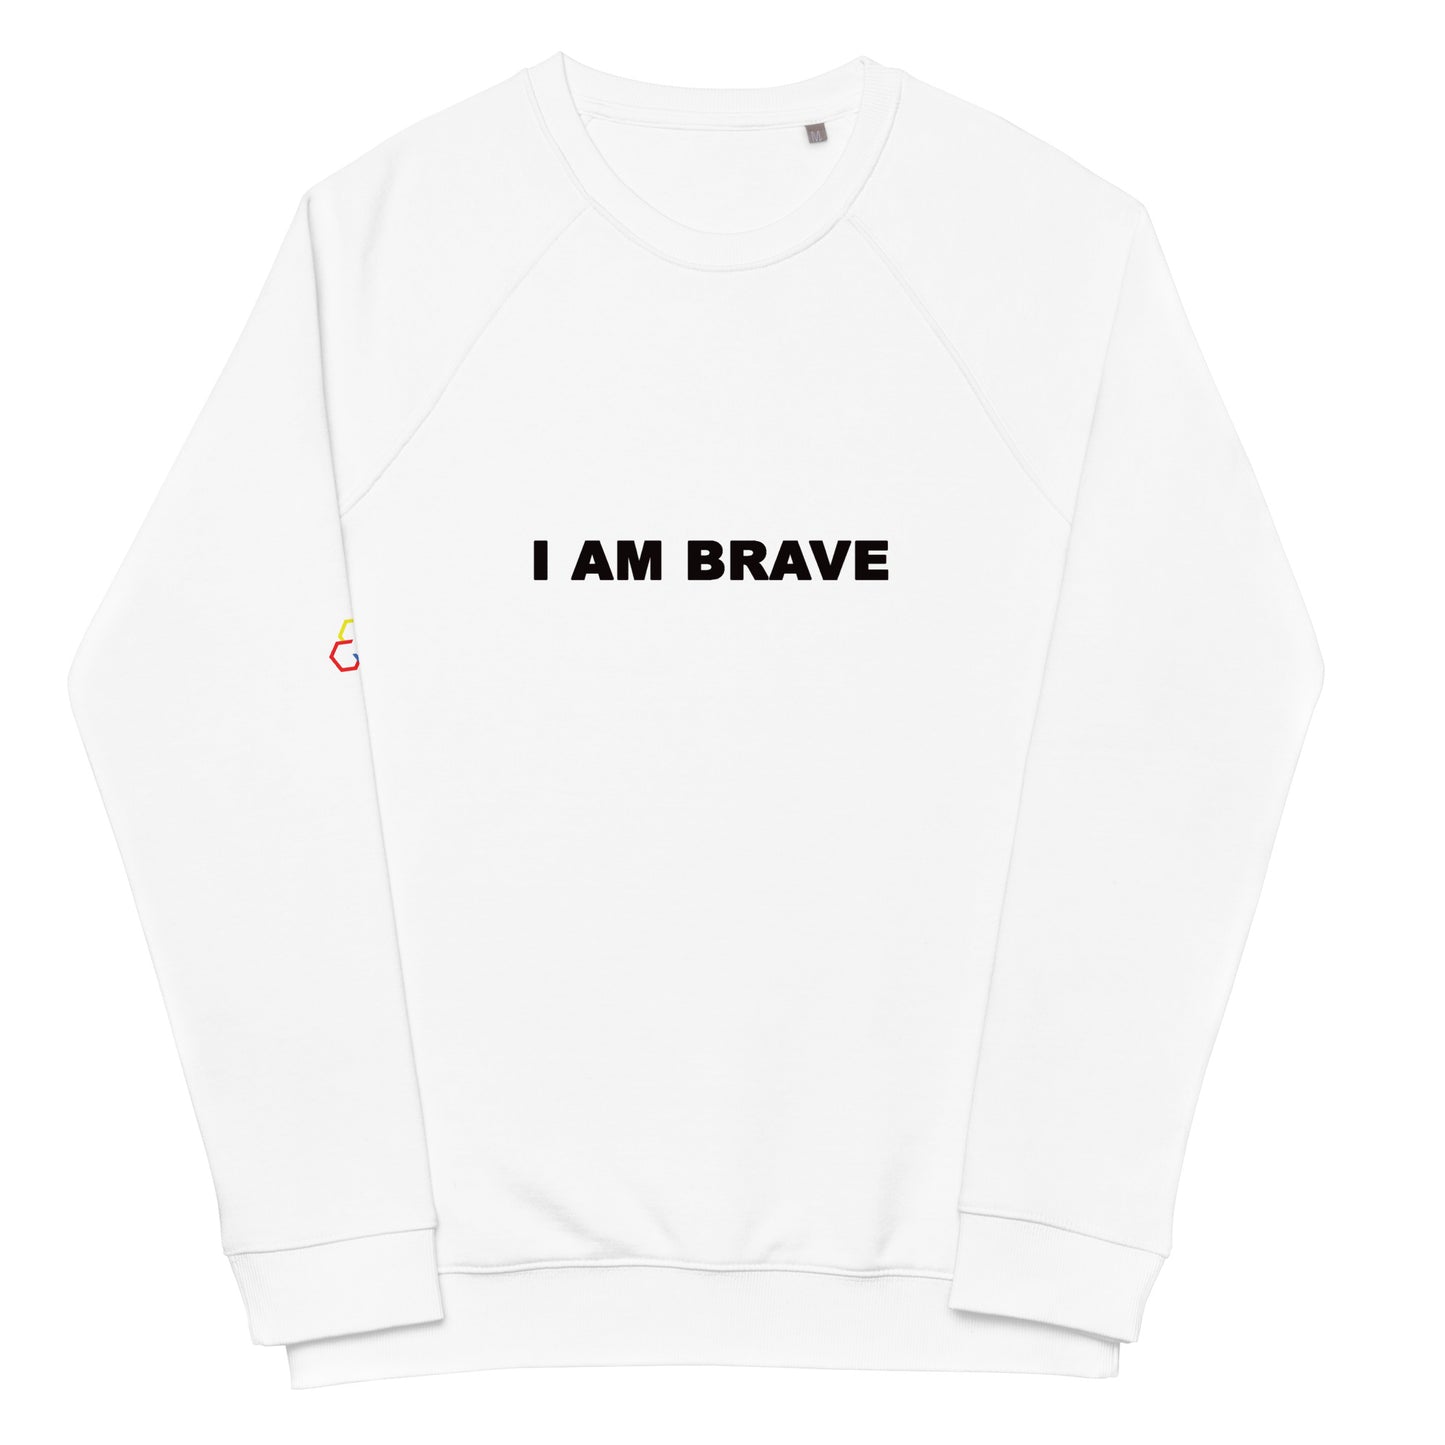 I AM BRAVE Unisex organic raglan sweatshirt